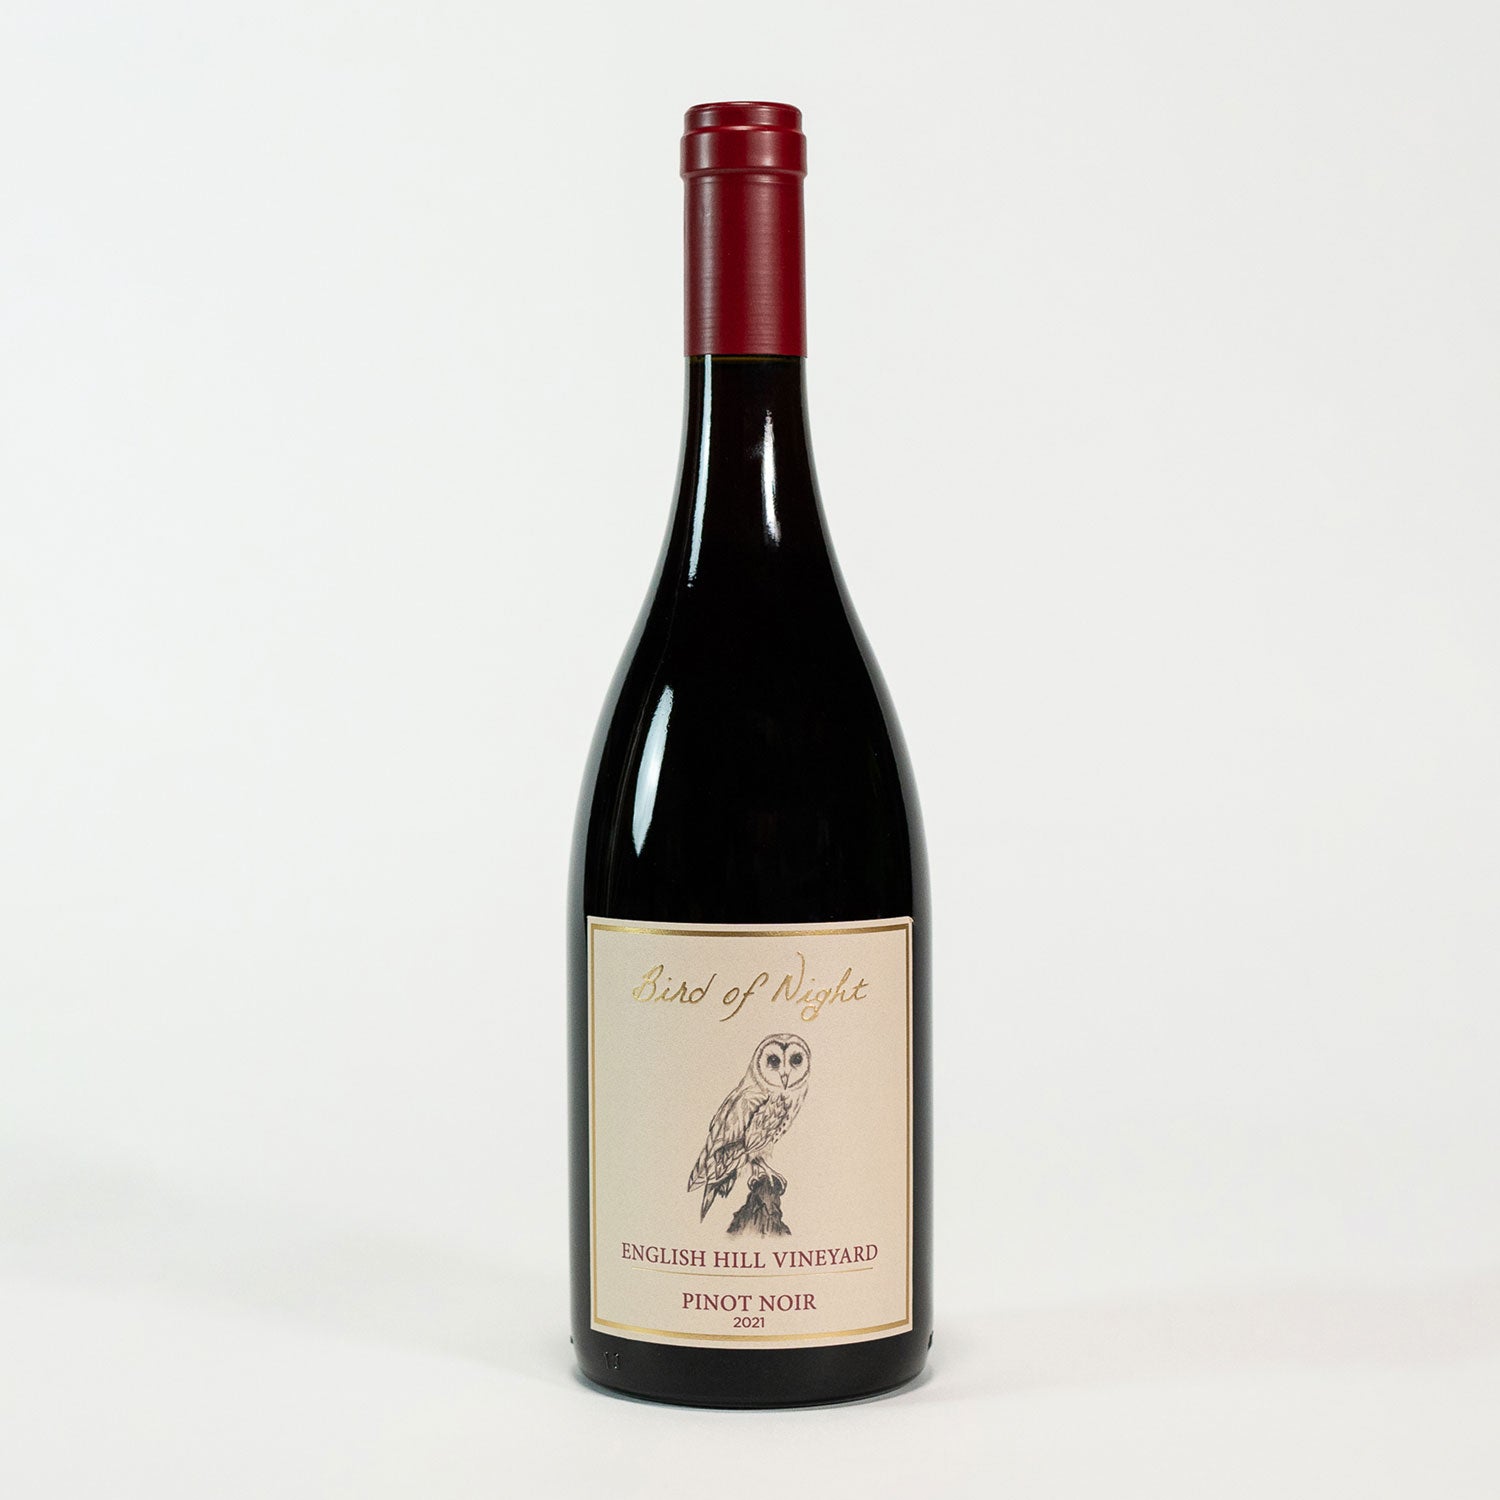 Bottle shot of 2021 English Hill Vineyard Pinot Noir on white background